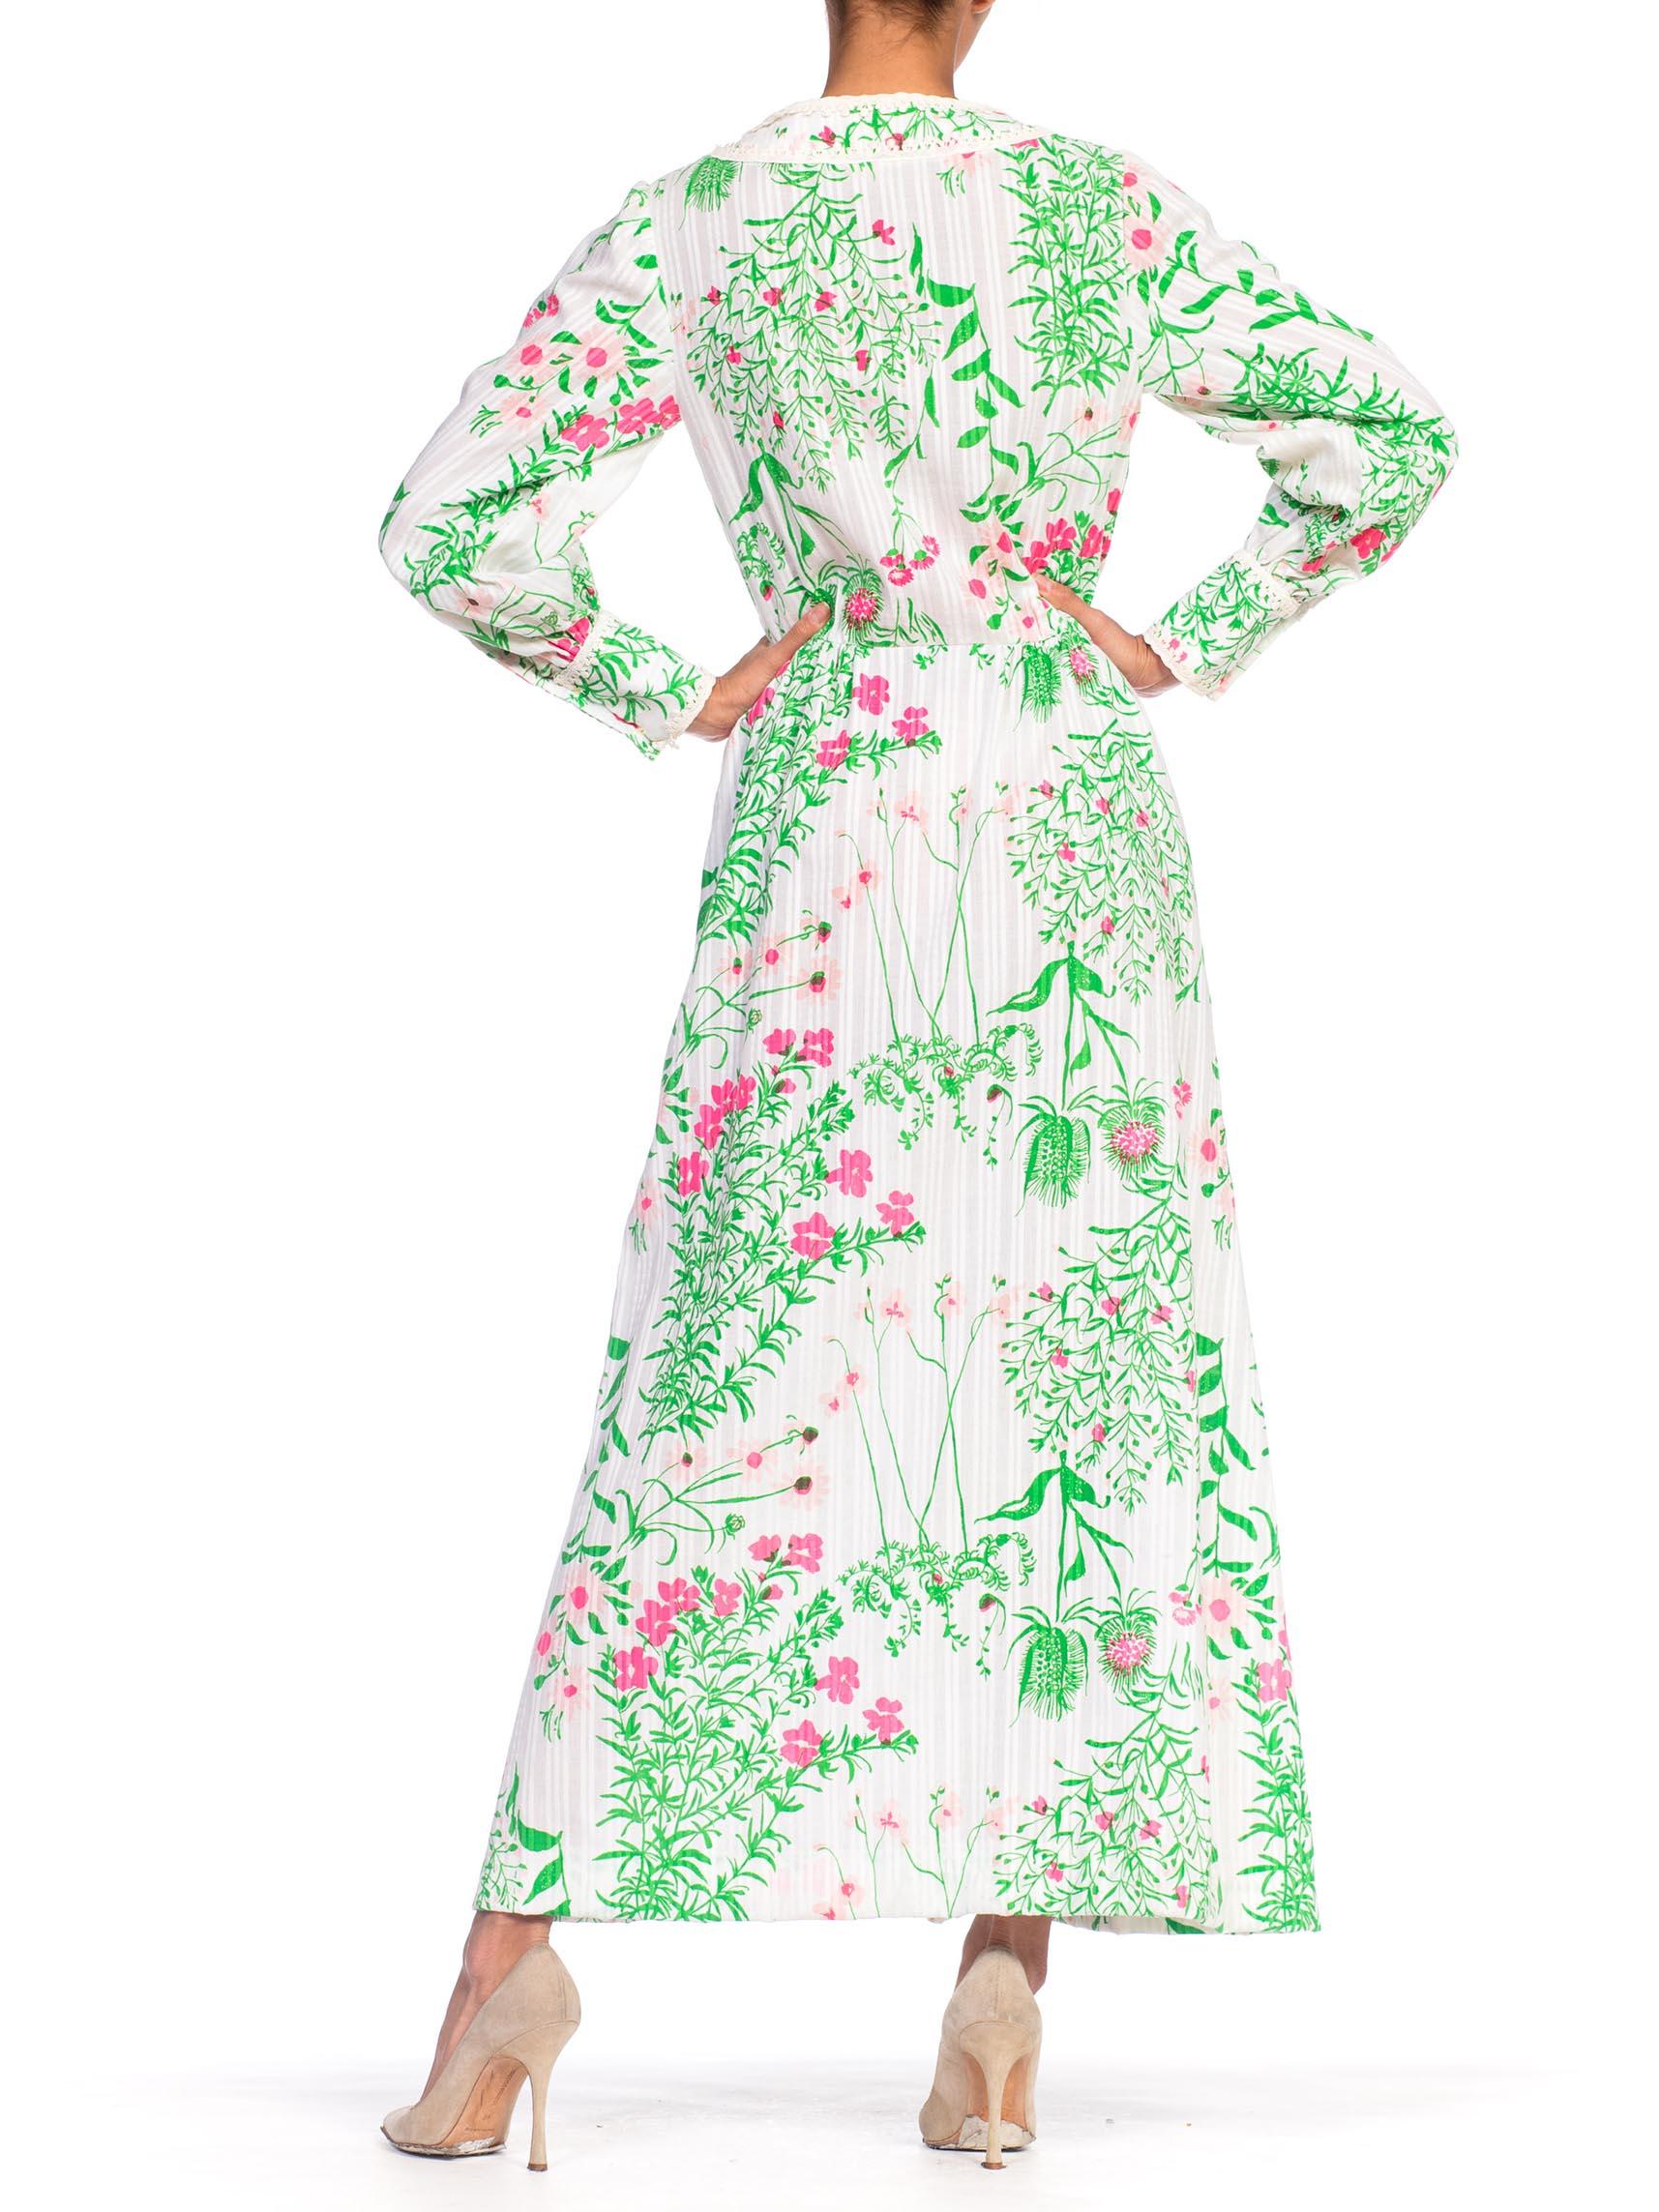 Women's 1960 - 1970s Lilly Pulitzer Size Large Floral Cotton & Lace Dress